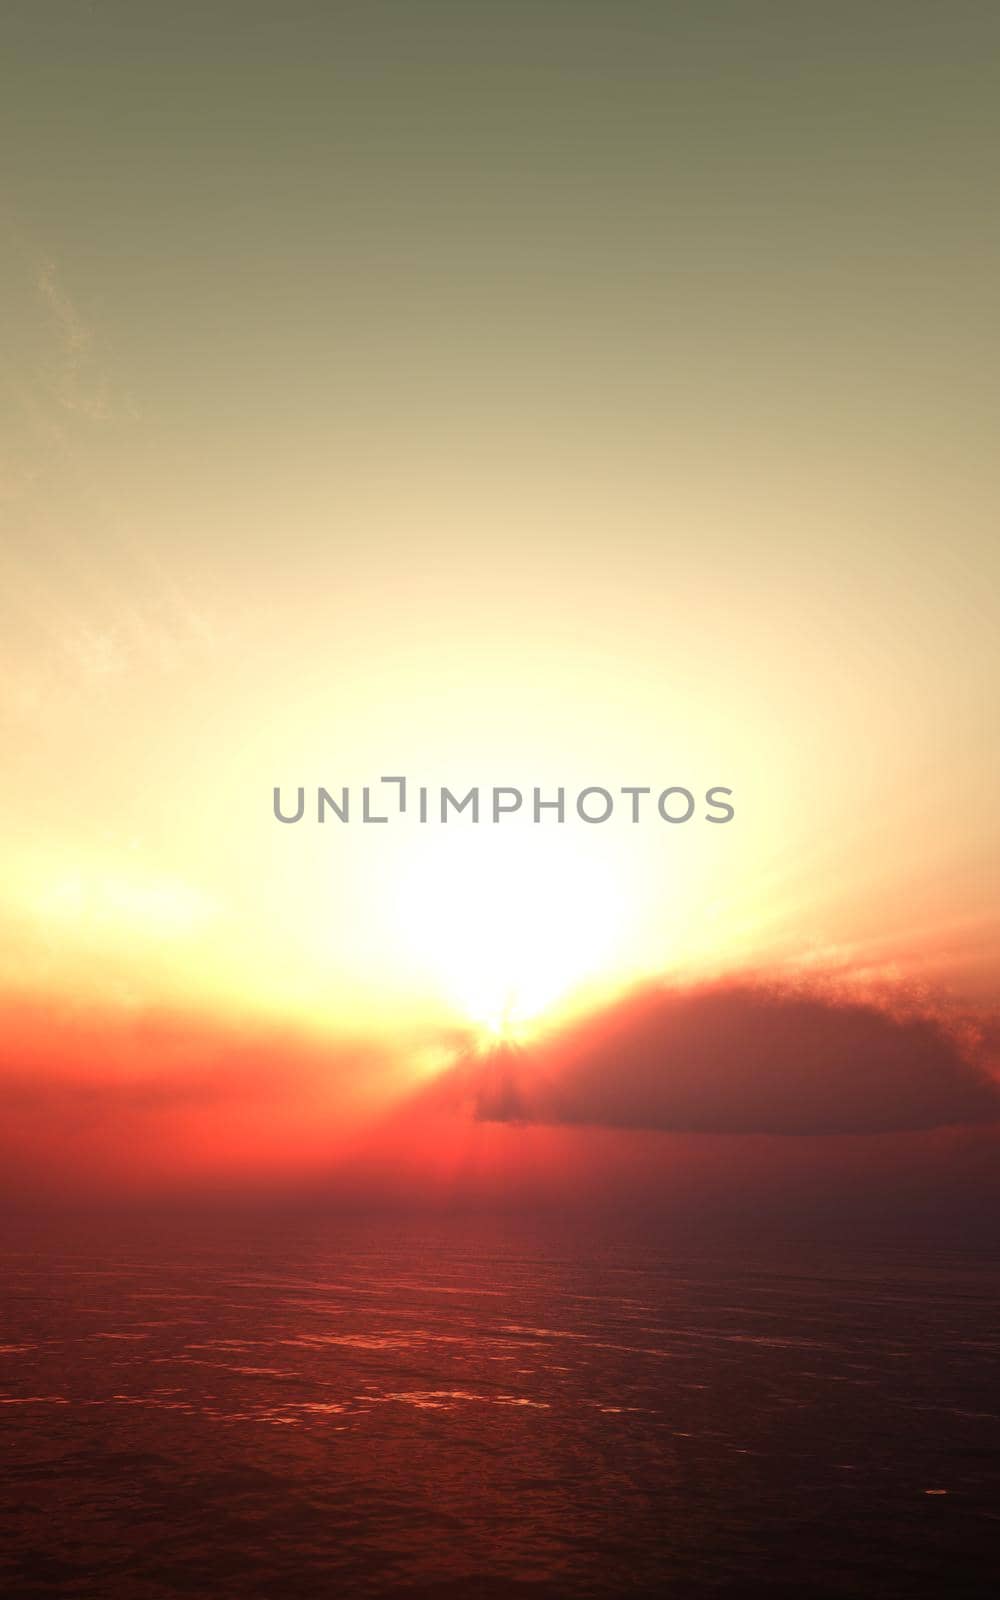 beautifully sunset over ocean, 3d render illustration